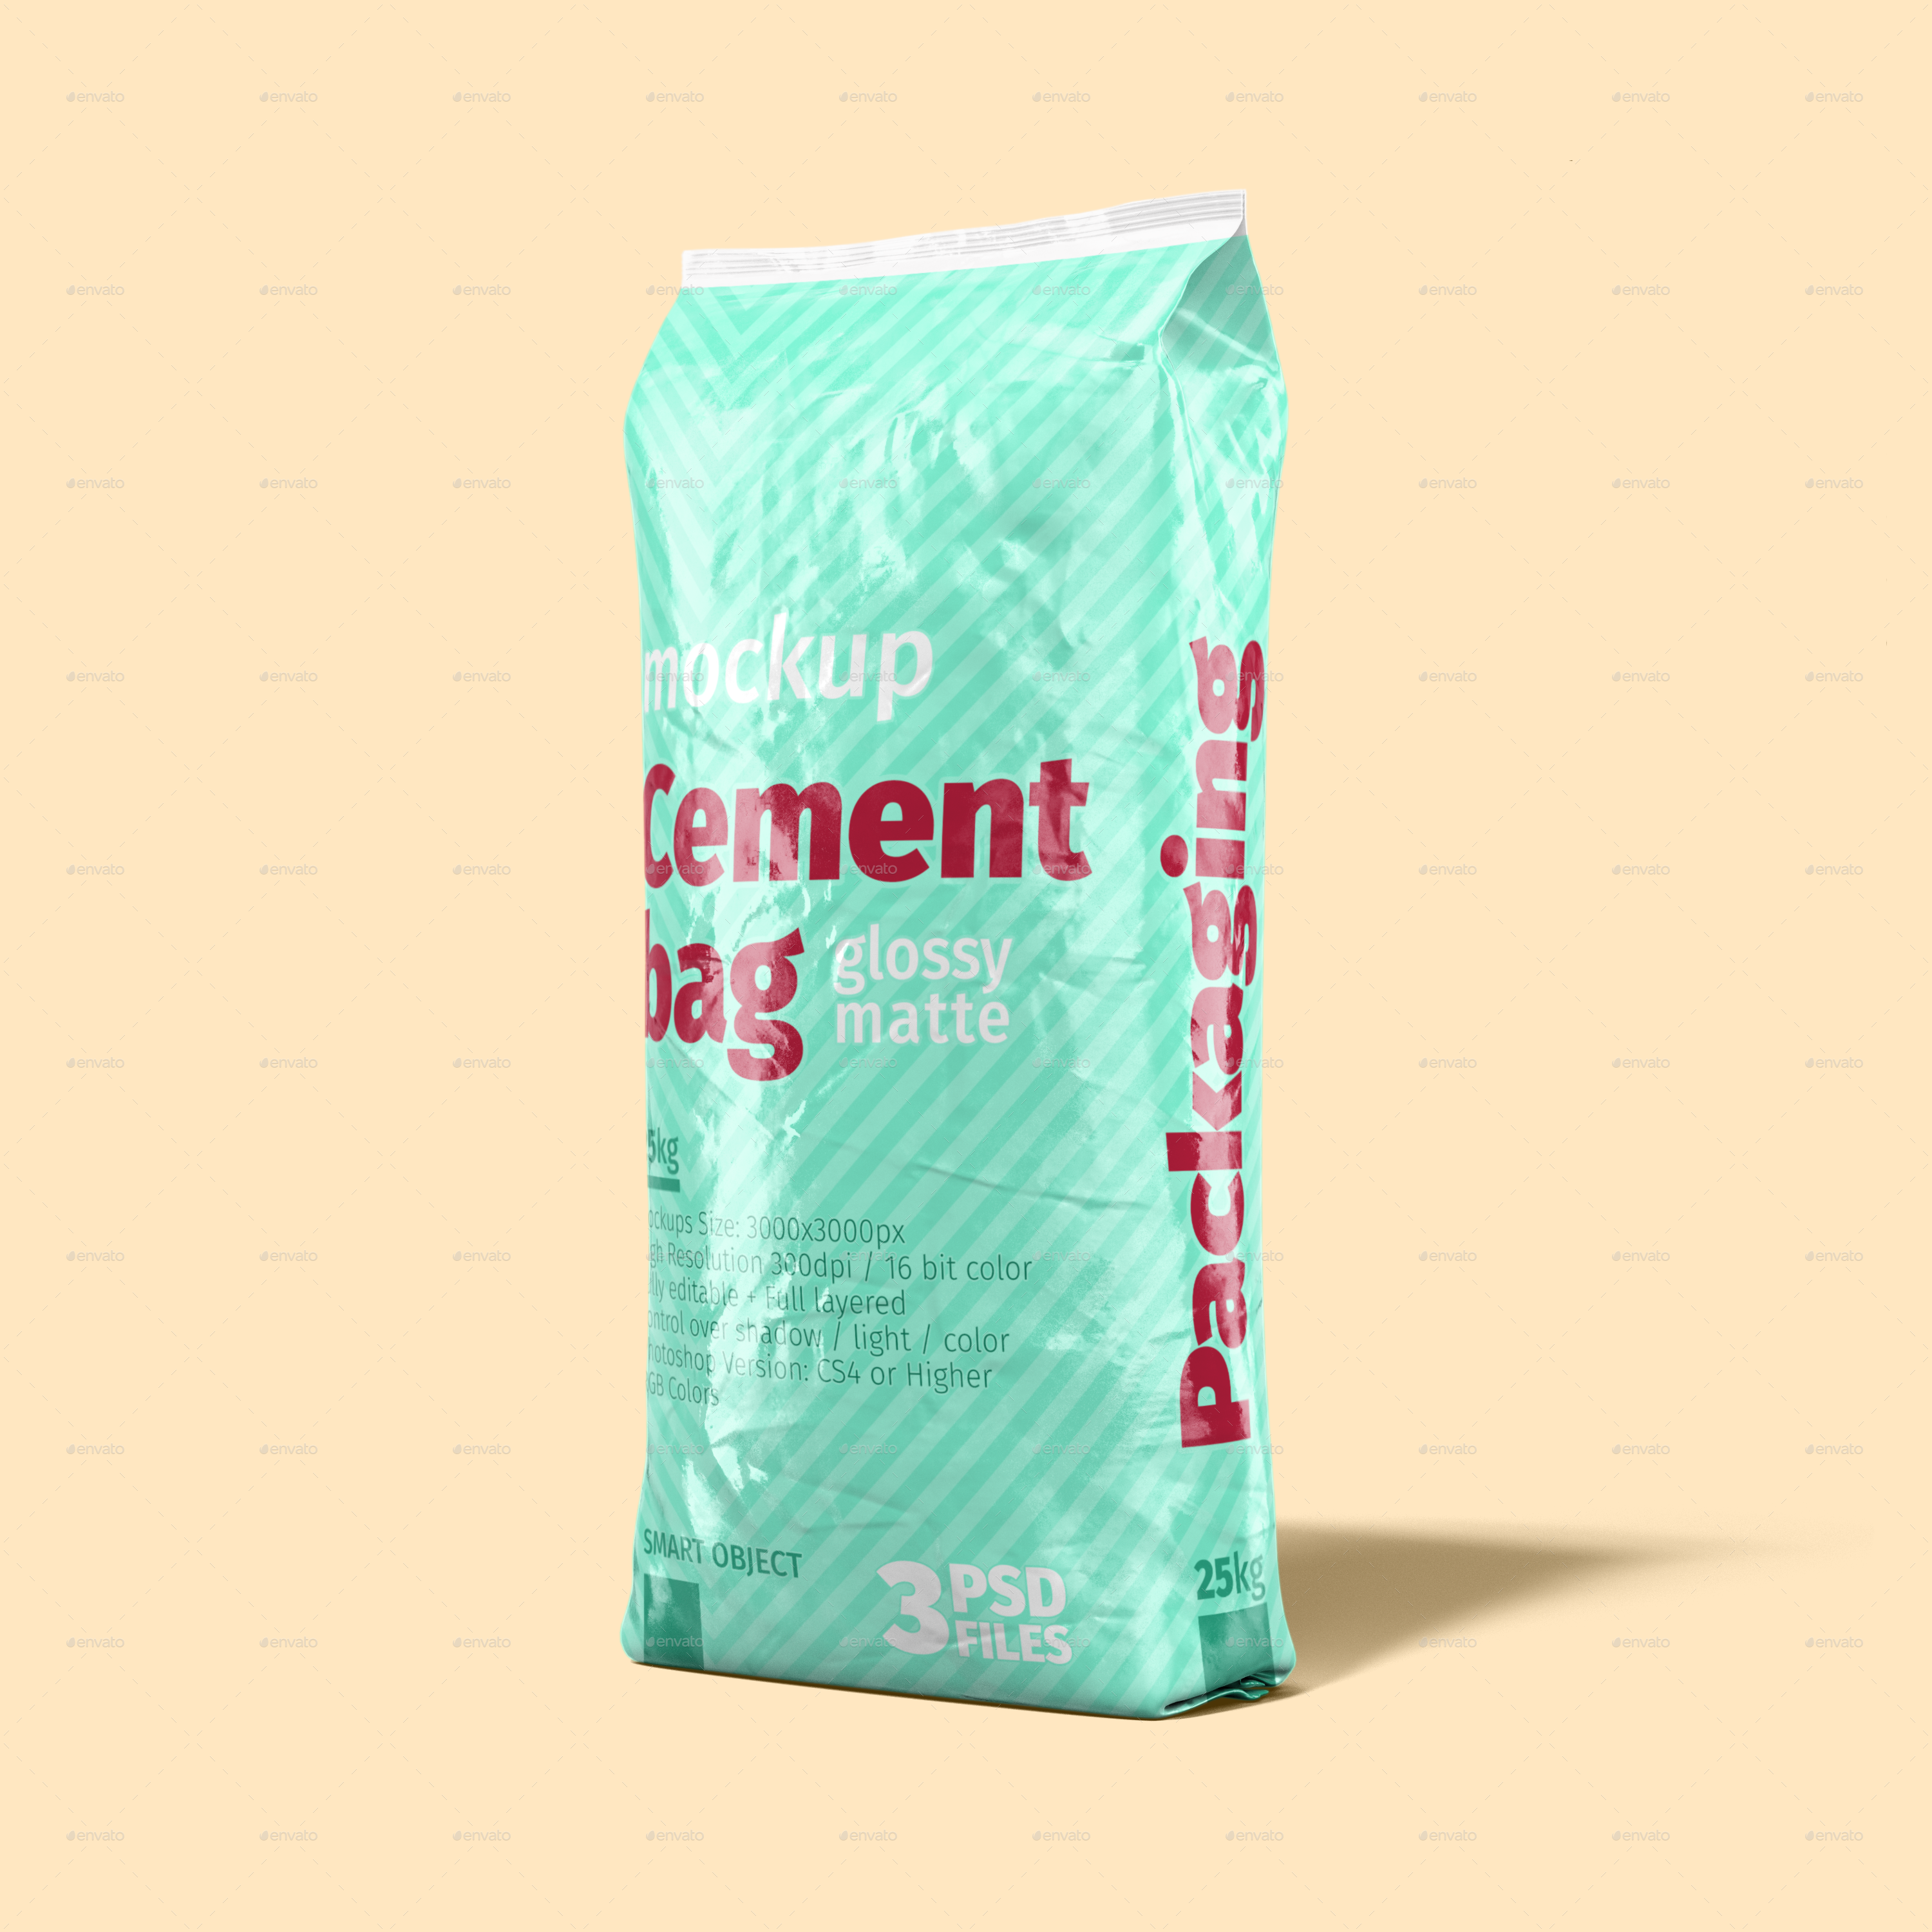 Cement Bag Mock-Up by Radetzki | GraphicRiver